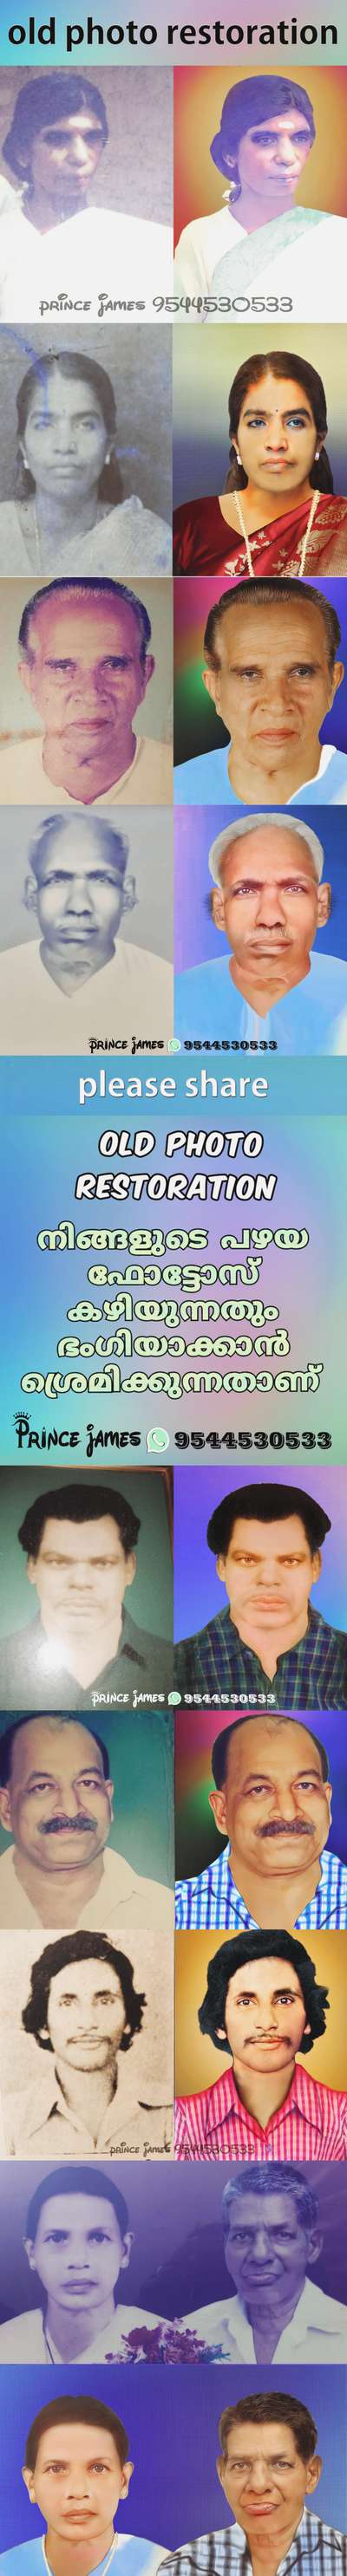 old photose Restoration works
whatsapp:
9544530533